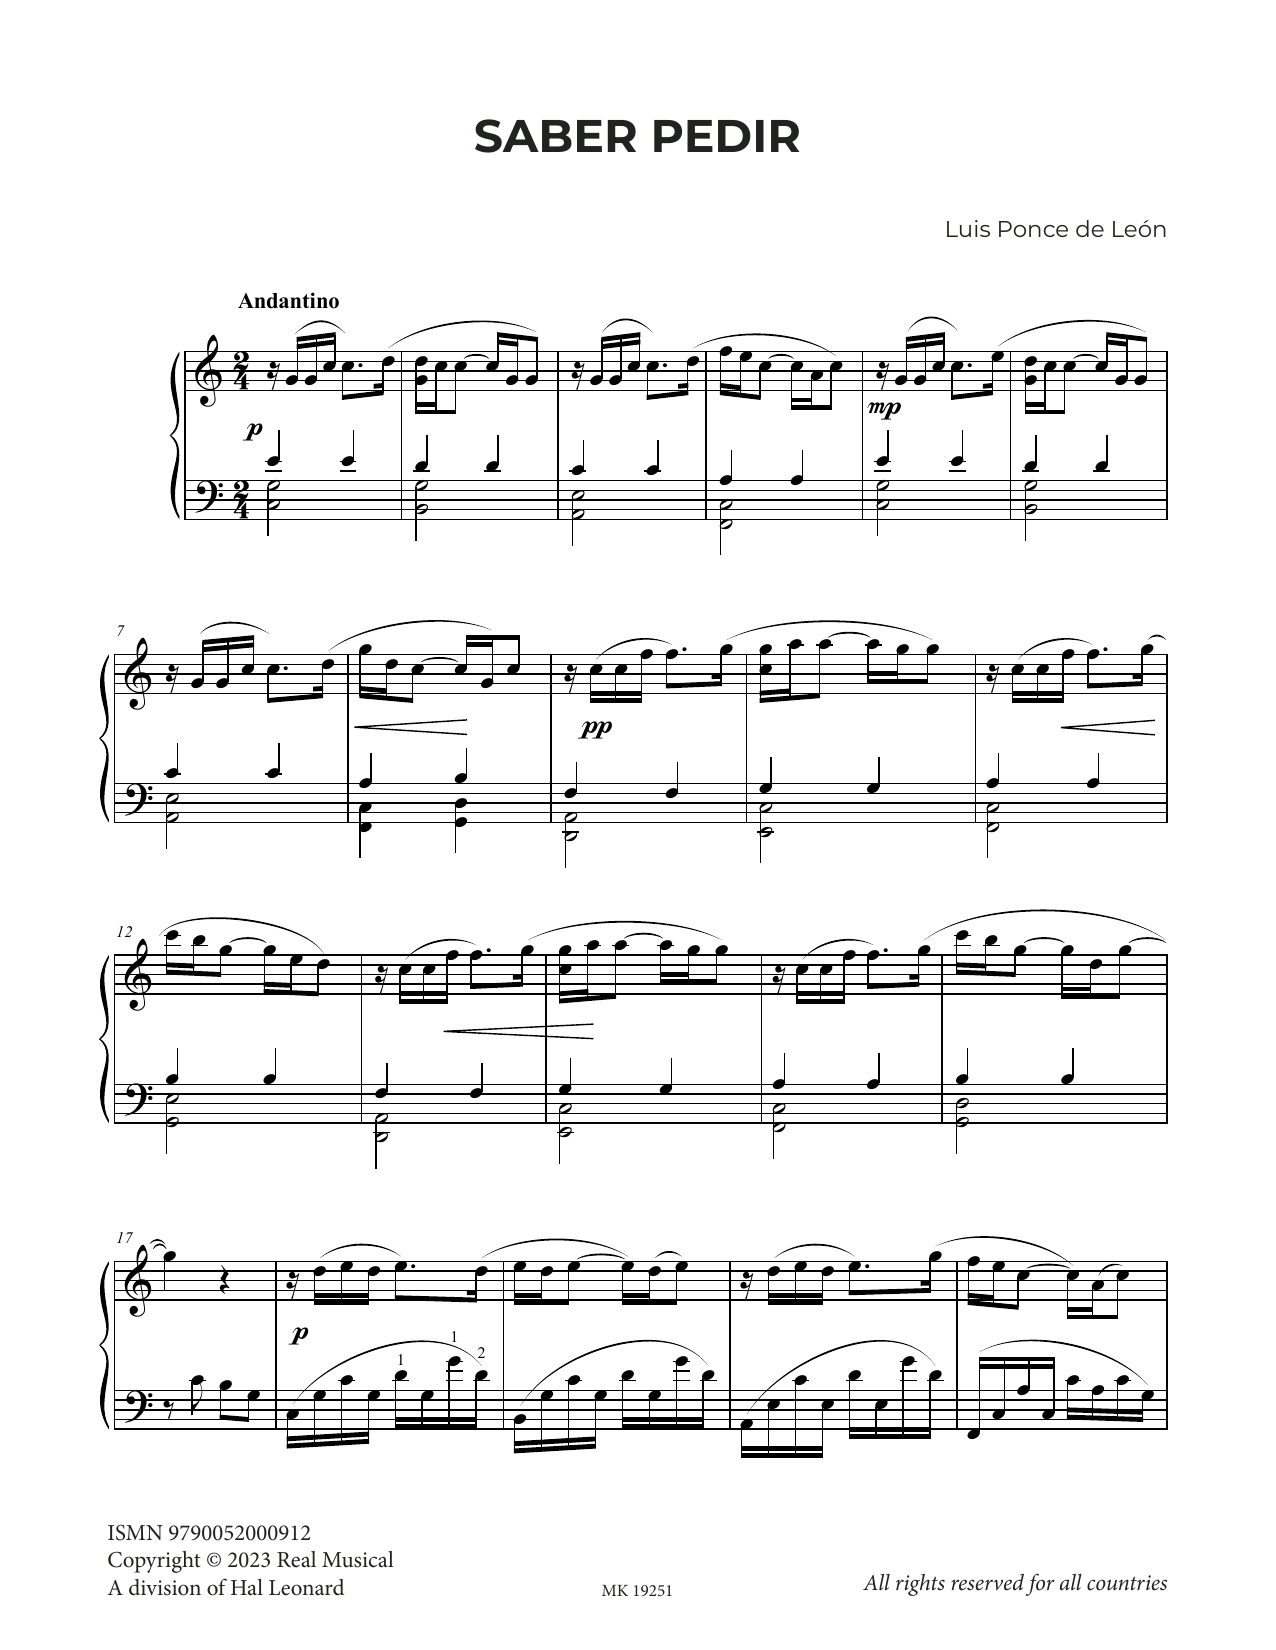 Luis Ponce de León Saber pedir sheet music notes and chords arranged for Piano Solo